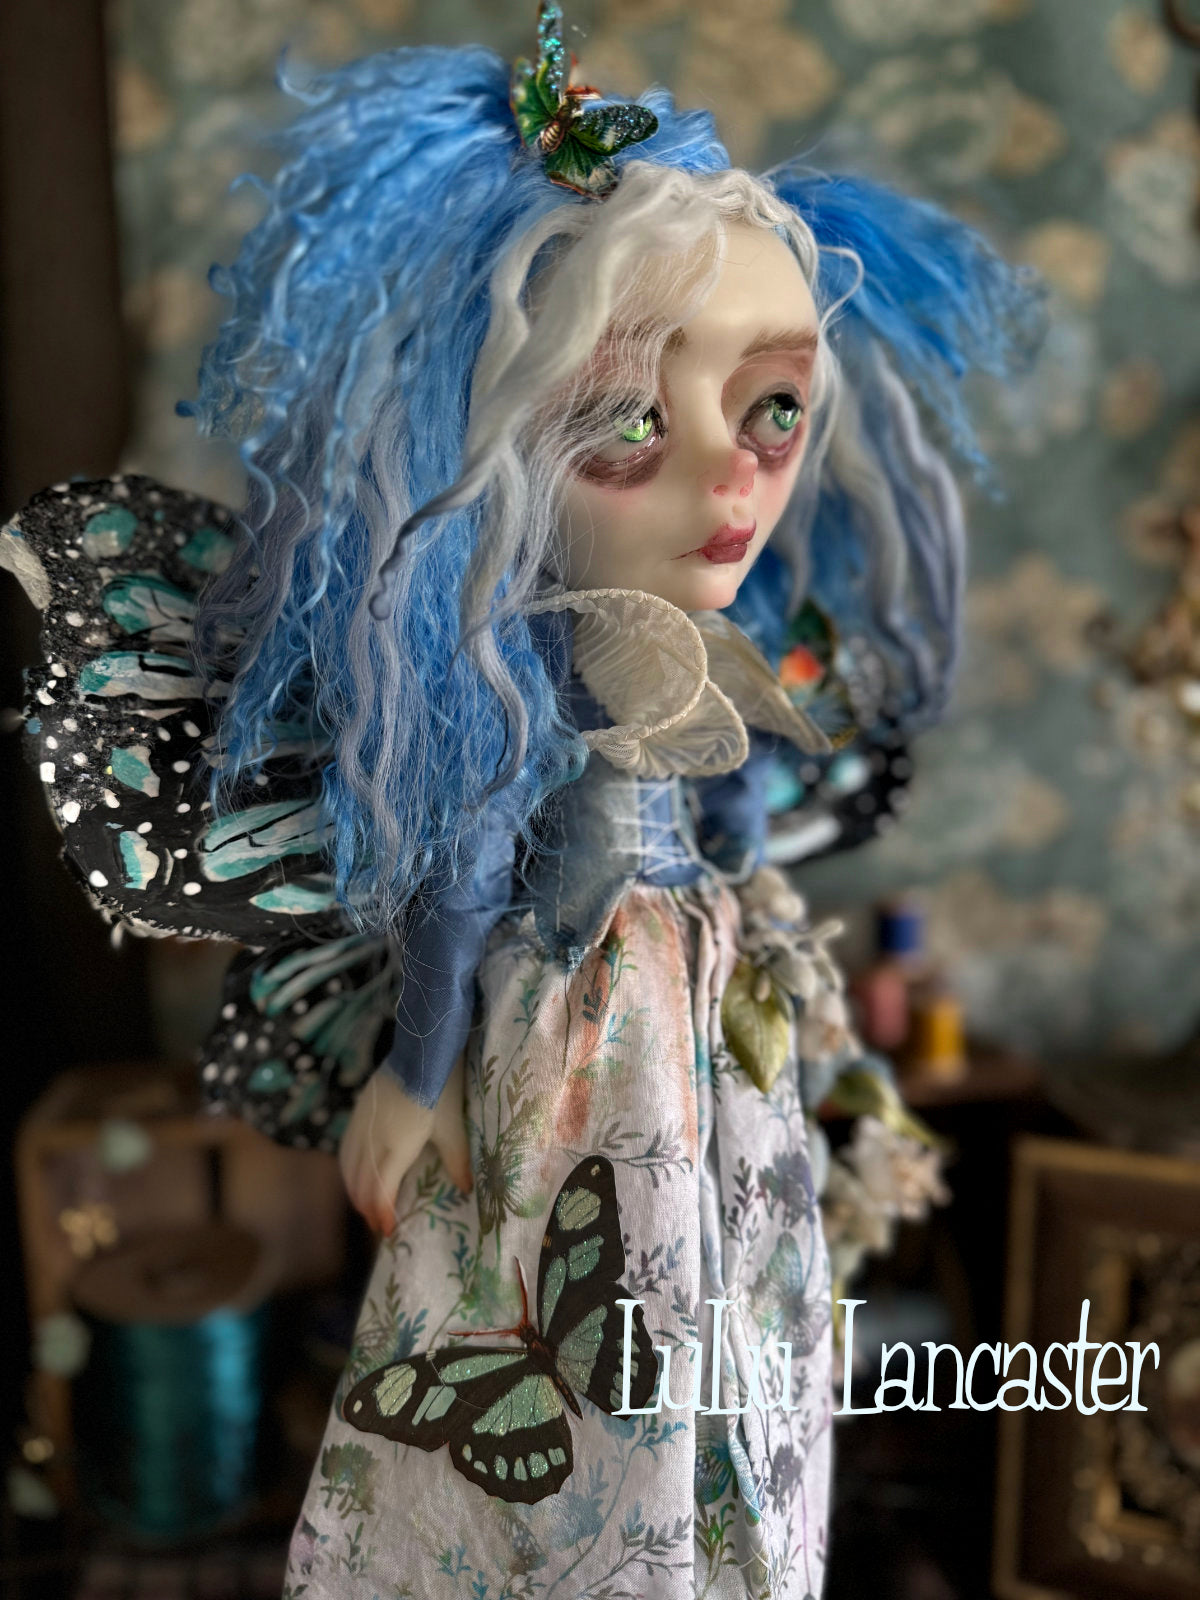 Olette the Blue Butterfly Original LuLu Lancaster Art Doll